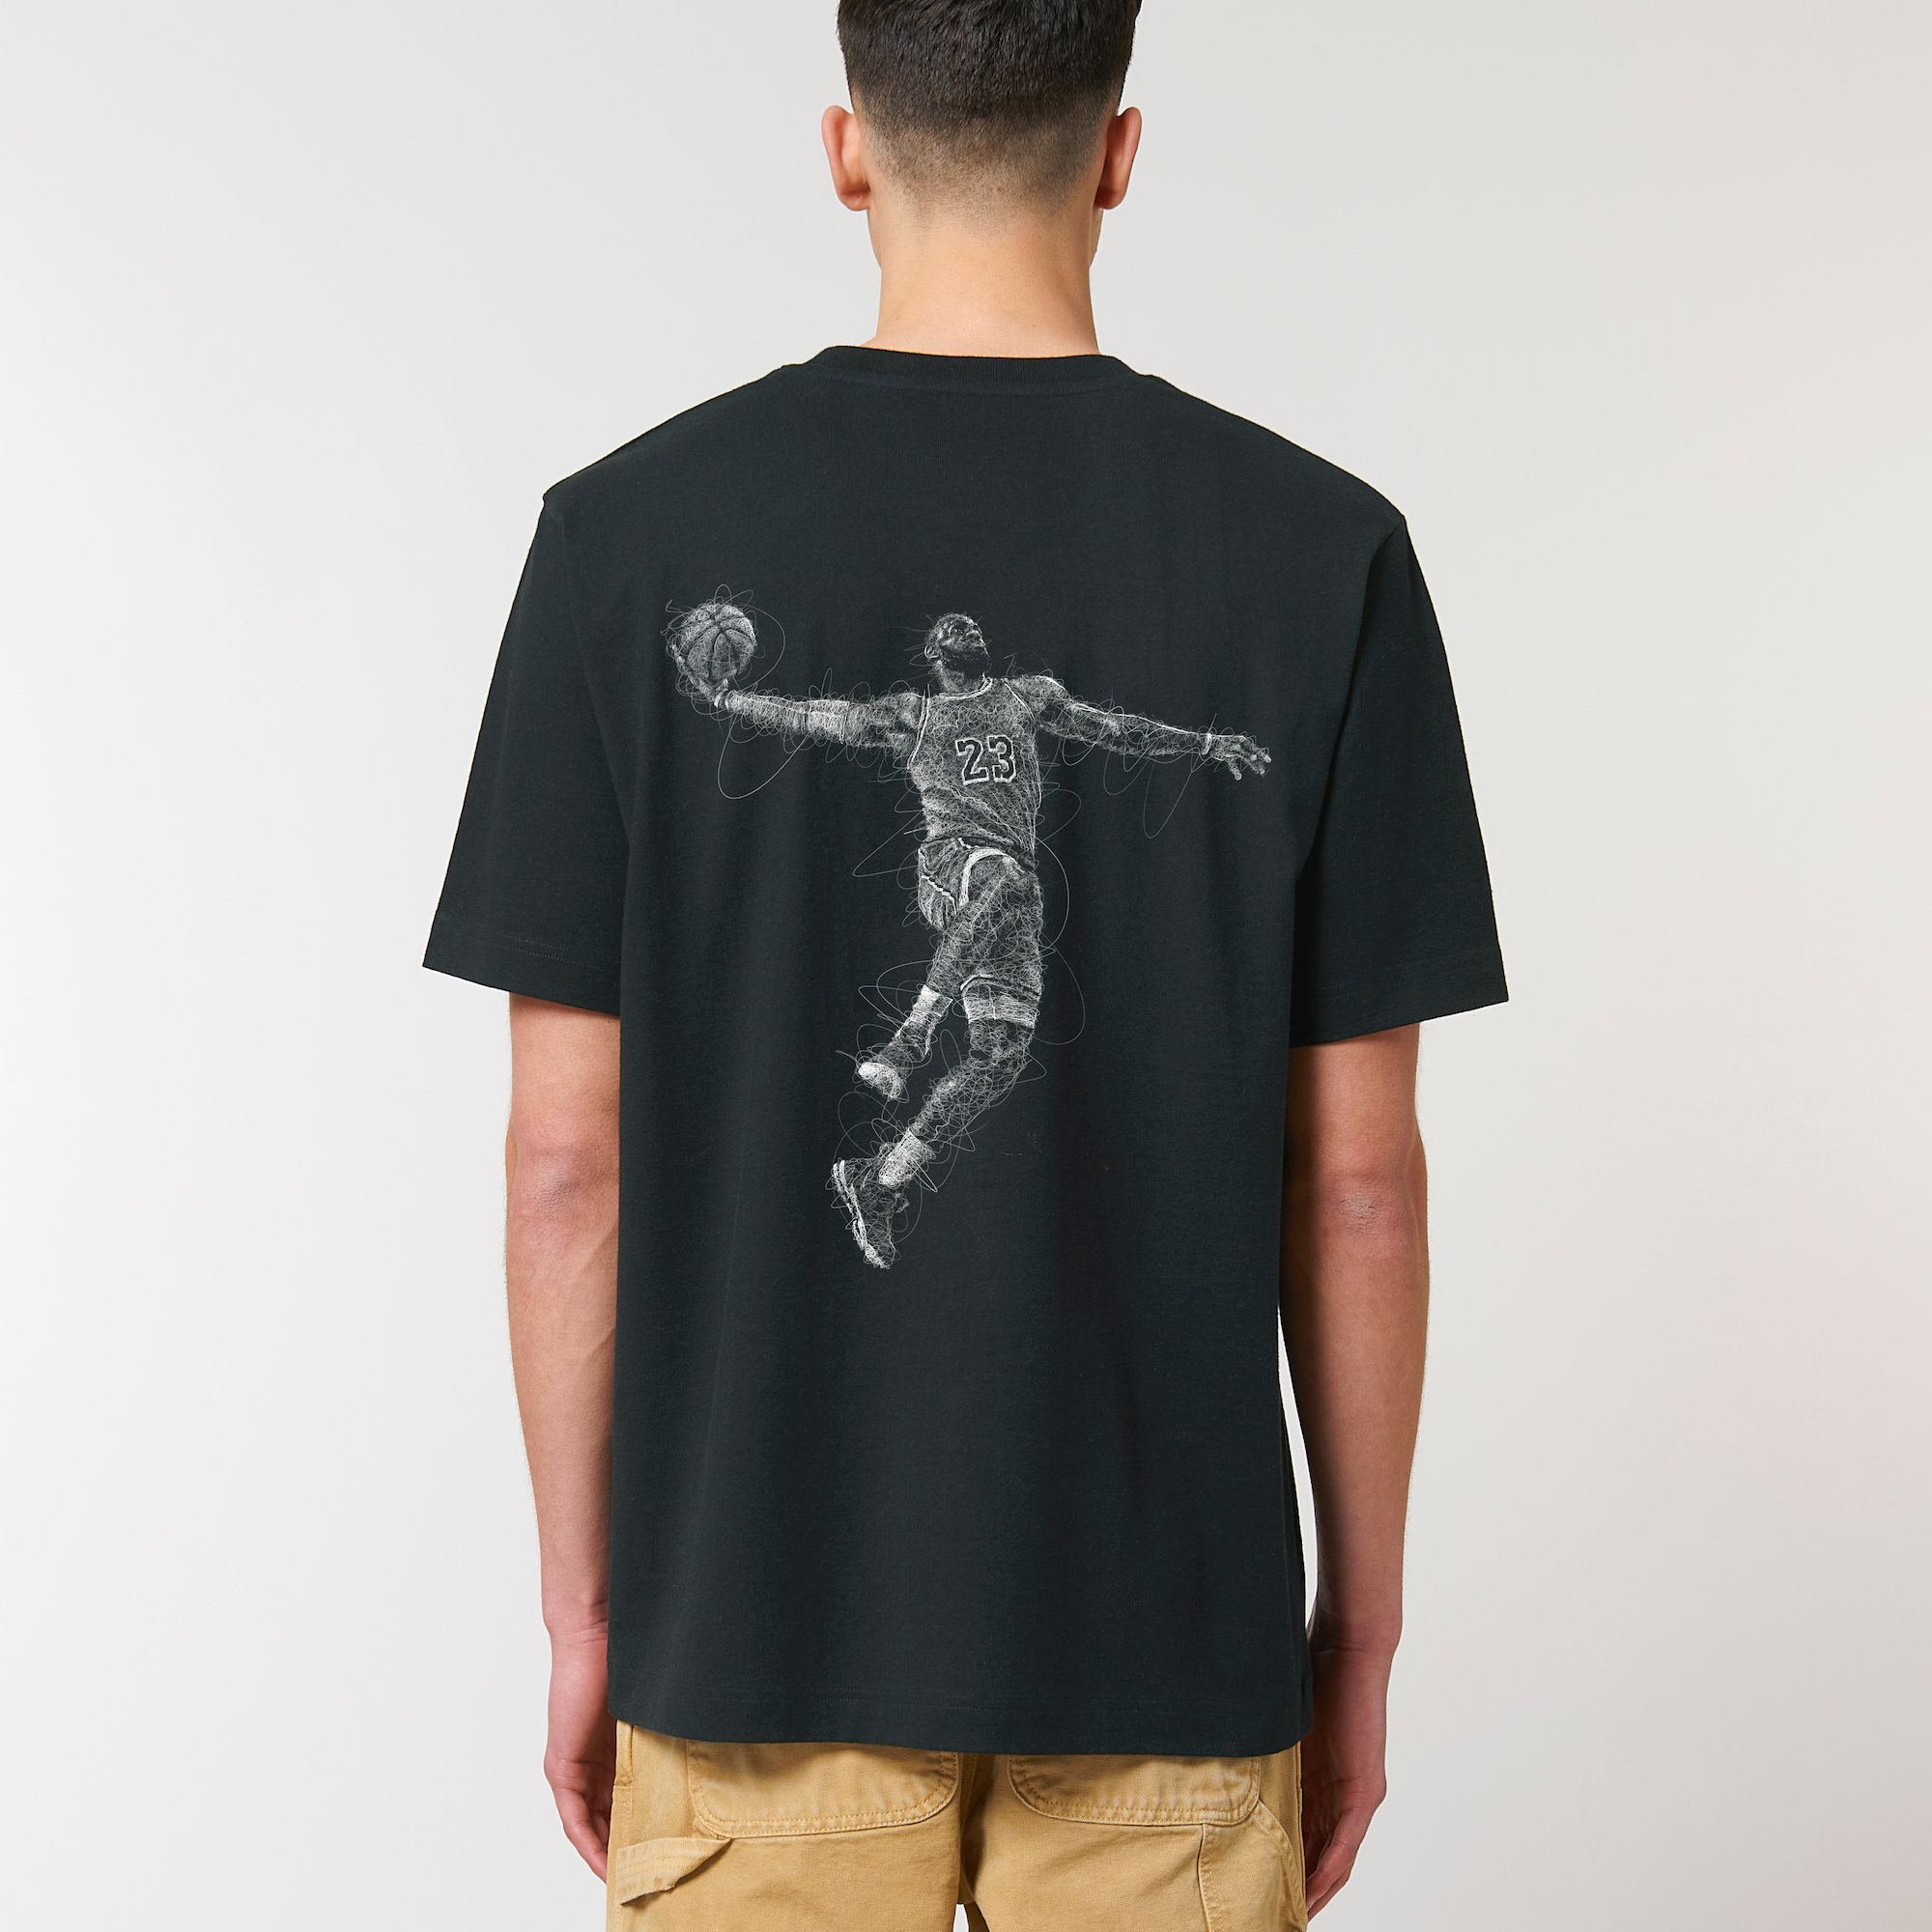 Nike Kobe Bryant Black Mamba Snake X-ray 5 Champ Rings Black T Shirt Medium  rare